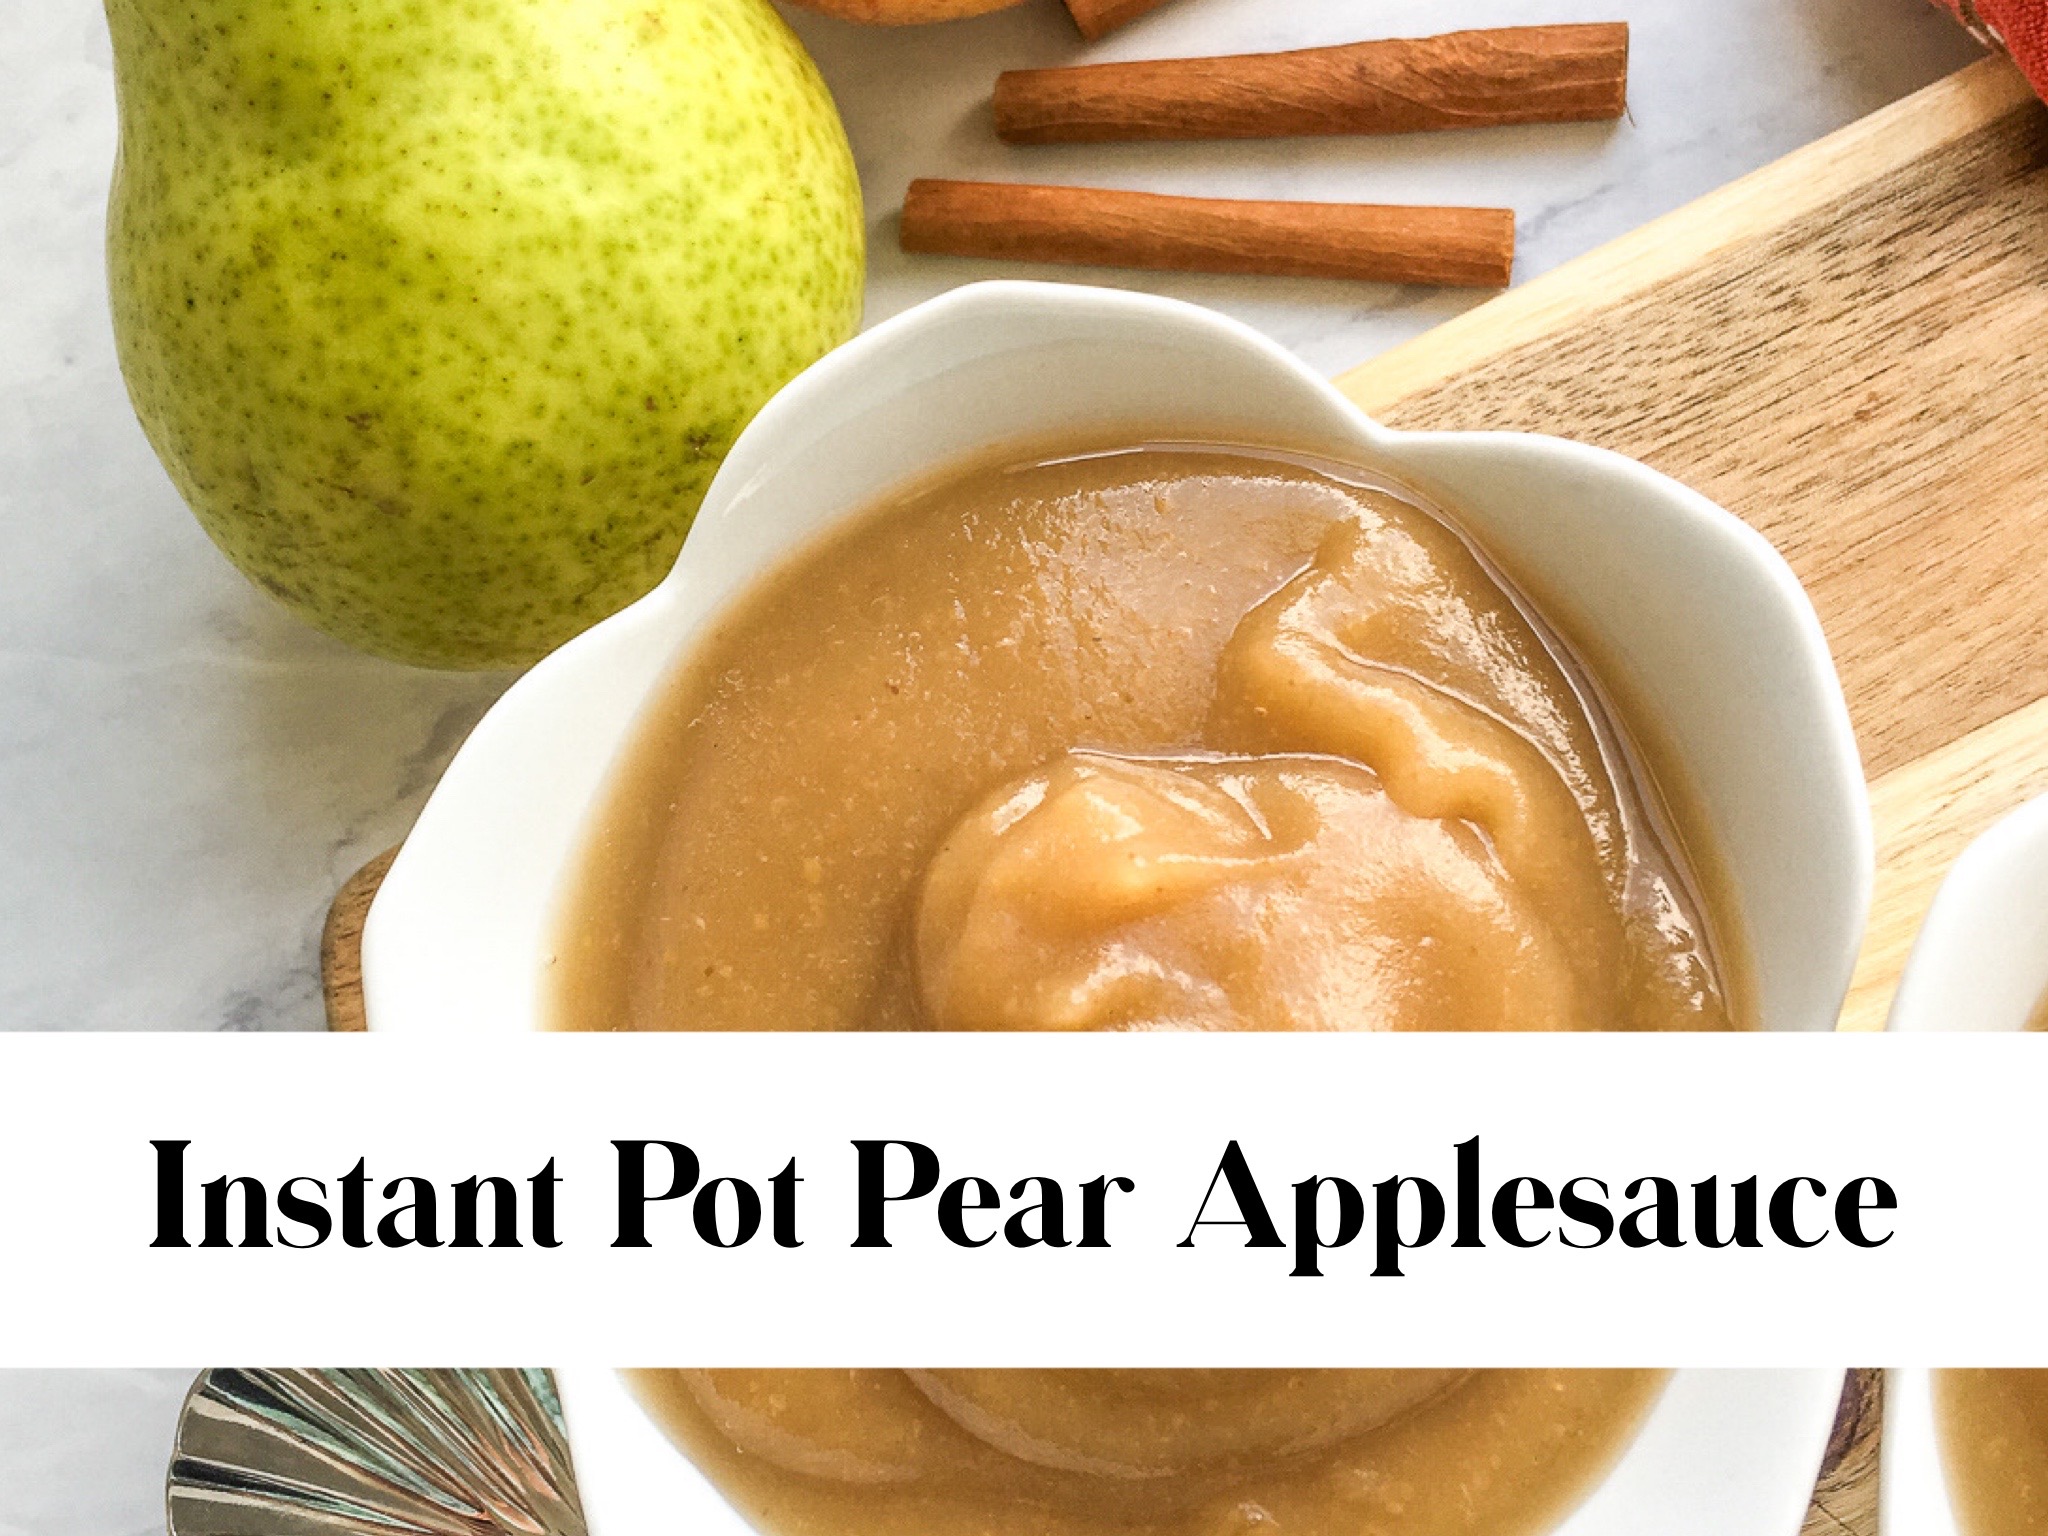 Instantpot pear applesauce